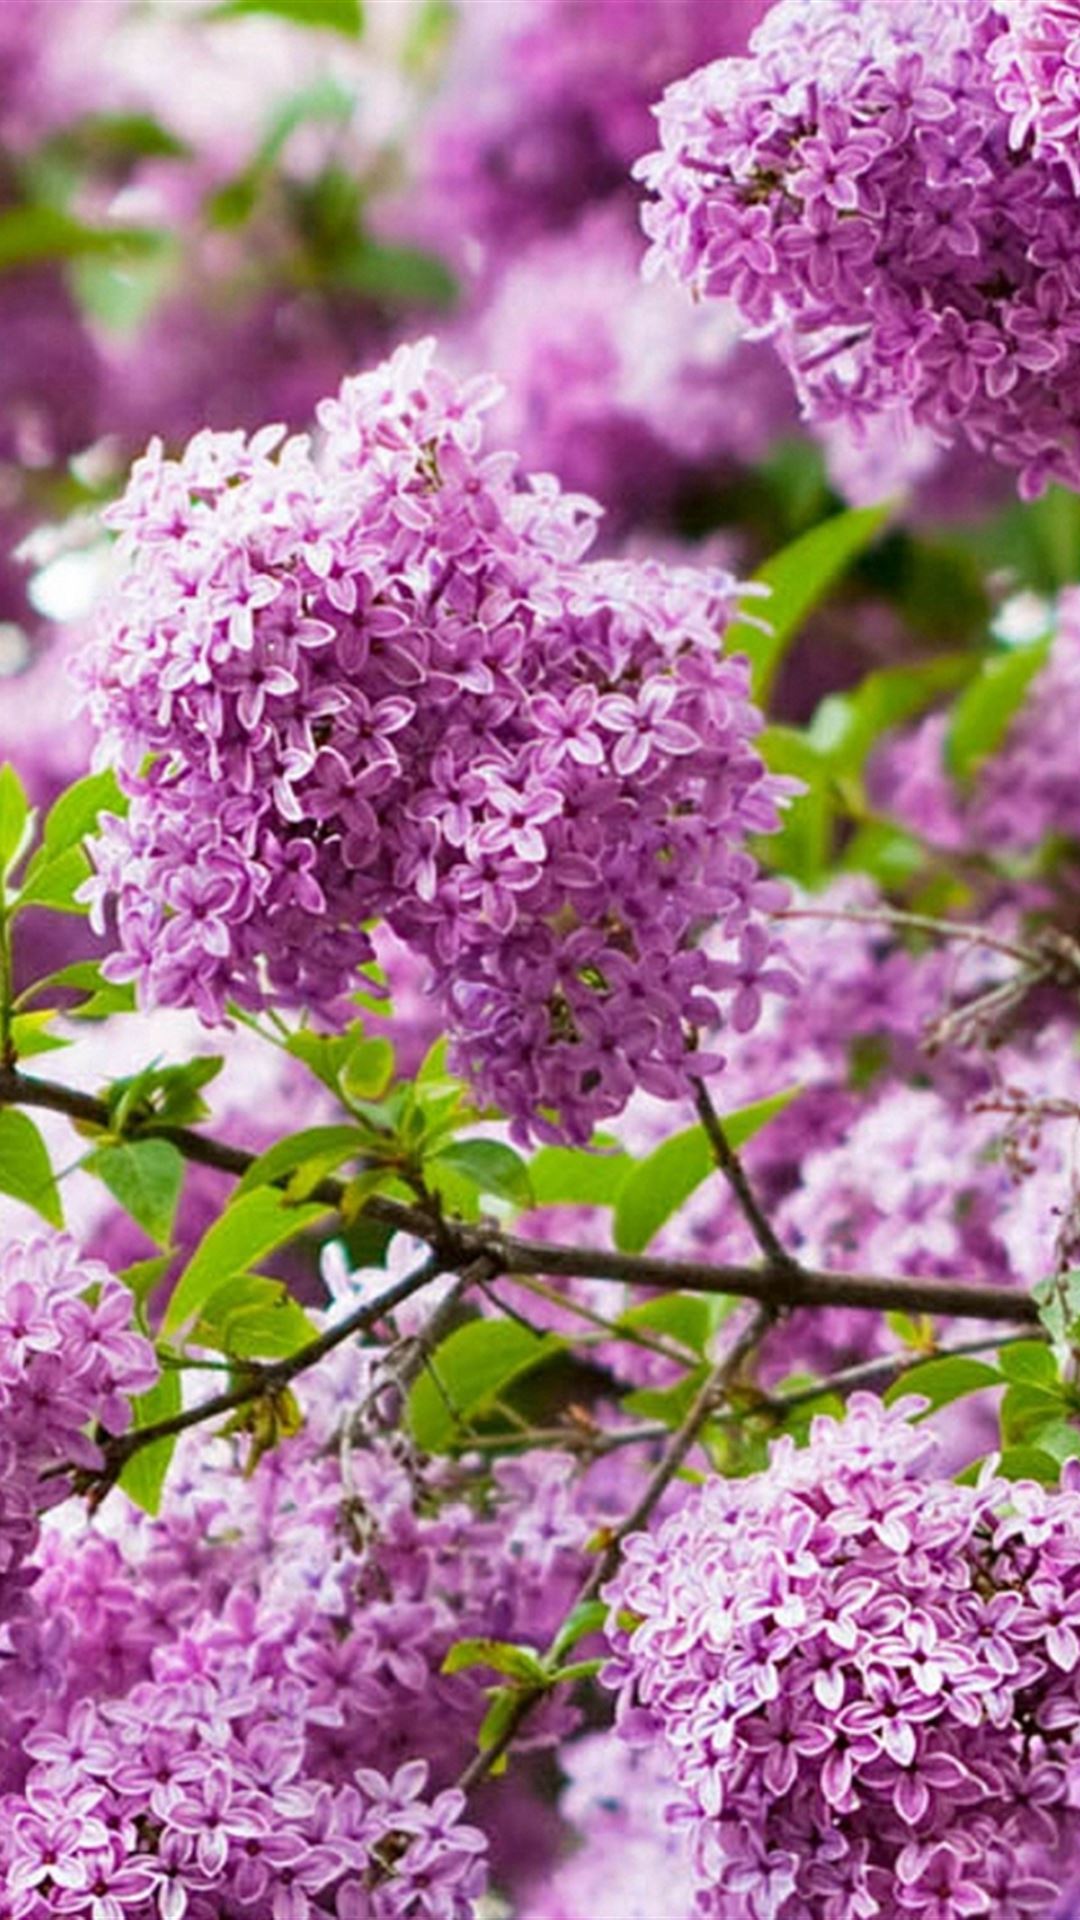 Purple Flowers Background Images  Free Download on Freepik